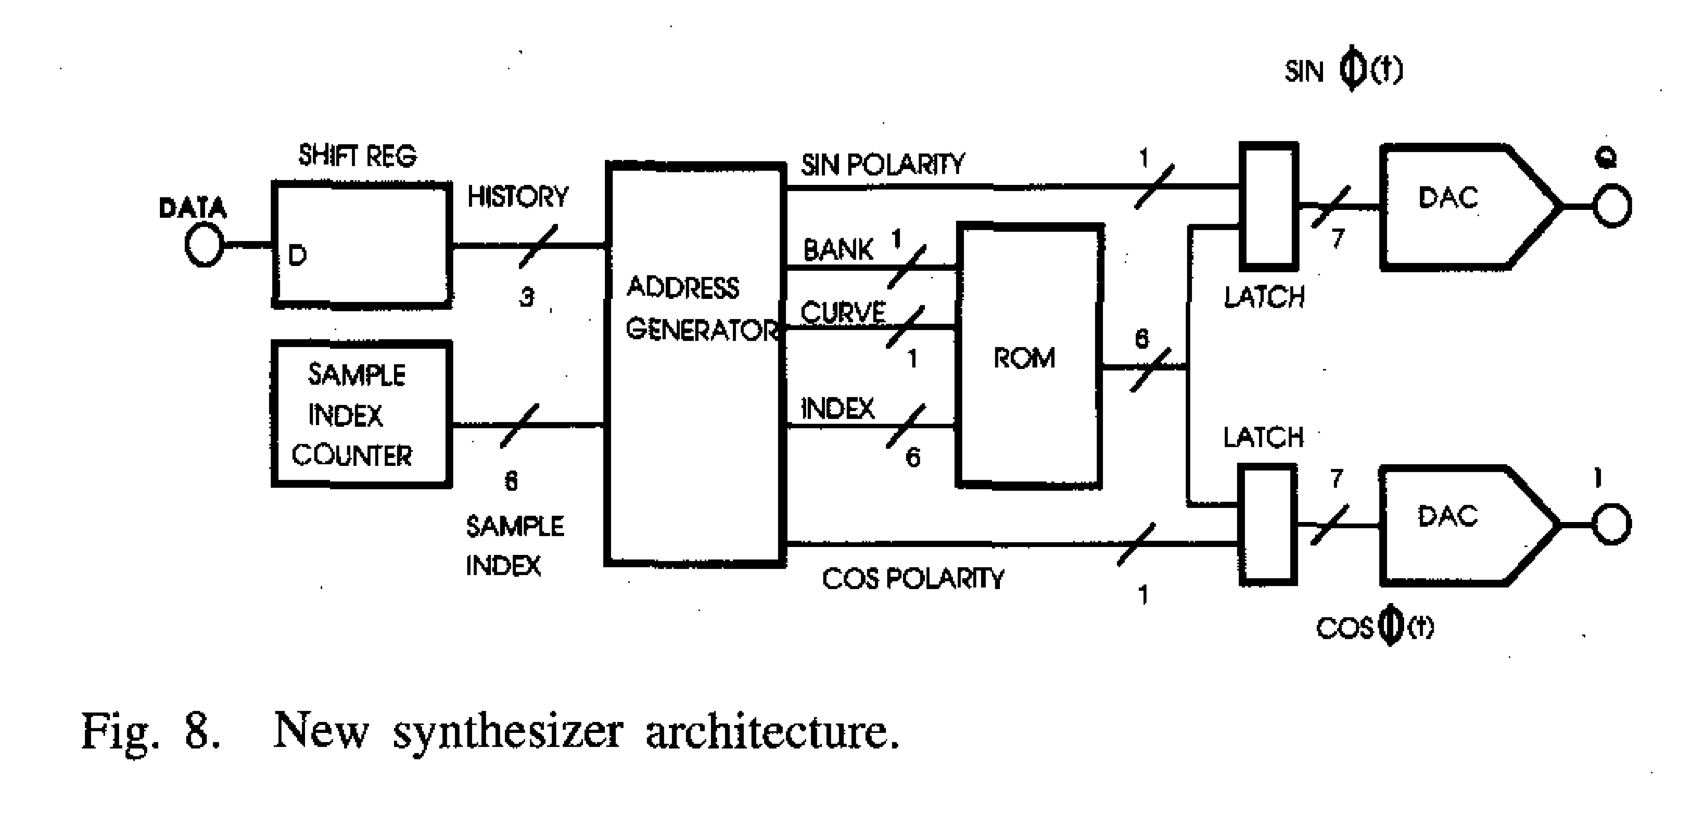 GMSK modulator architecture. Source: Linz1996 (doi://10.1109/82.481470)